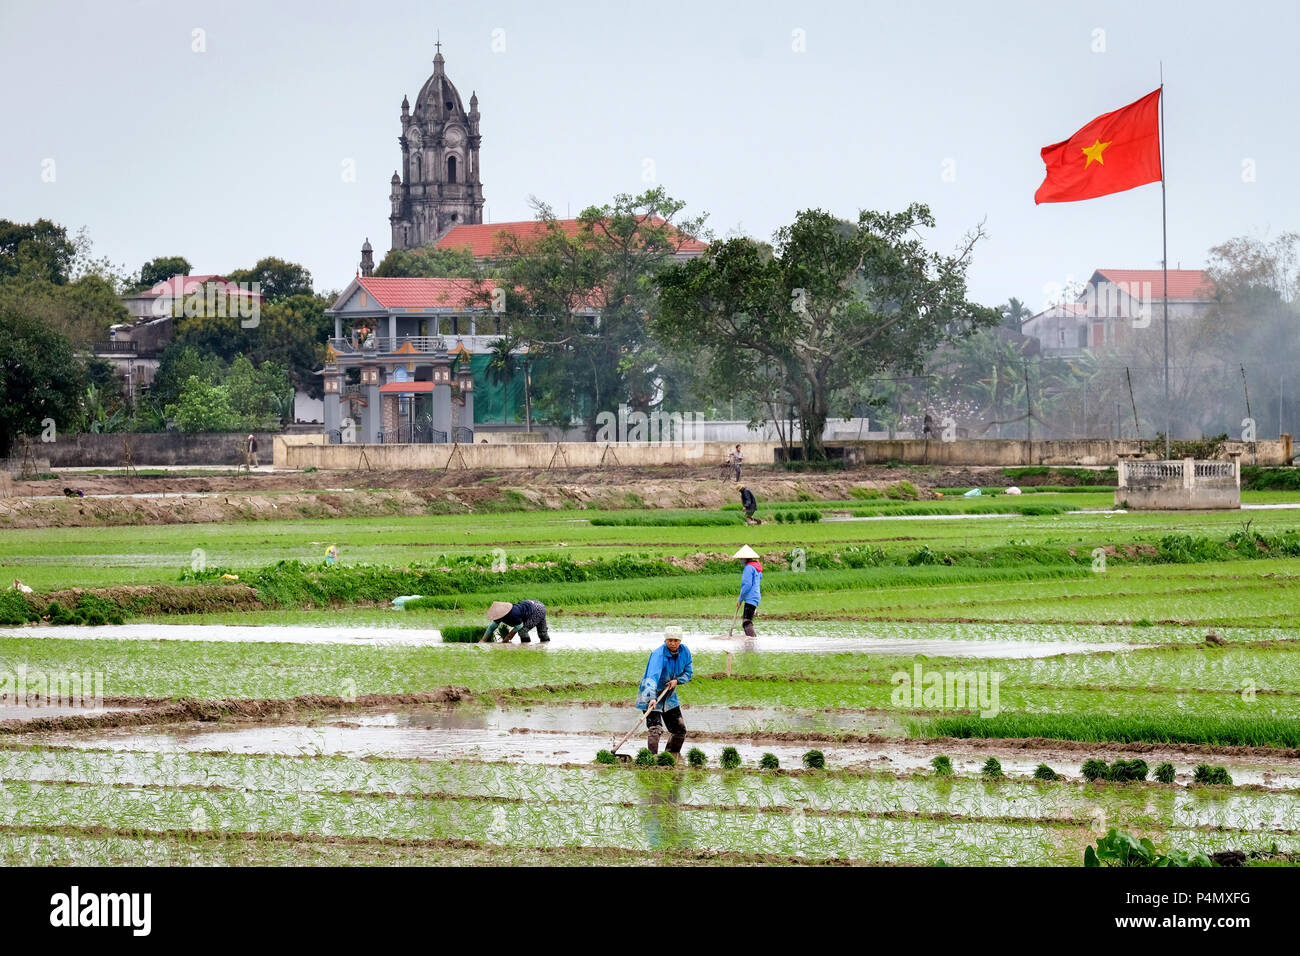 Woman planting rice in a paddy, Vietnam red country flag and catholic church in the background. Nam Dinh province, Vietnam - Frauen pflanzen Reis, Landesfahne Vietnams in einem Reisfeld in der Nam Dinh-Provinz, Vietnam Stock Photo